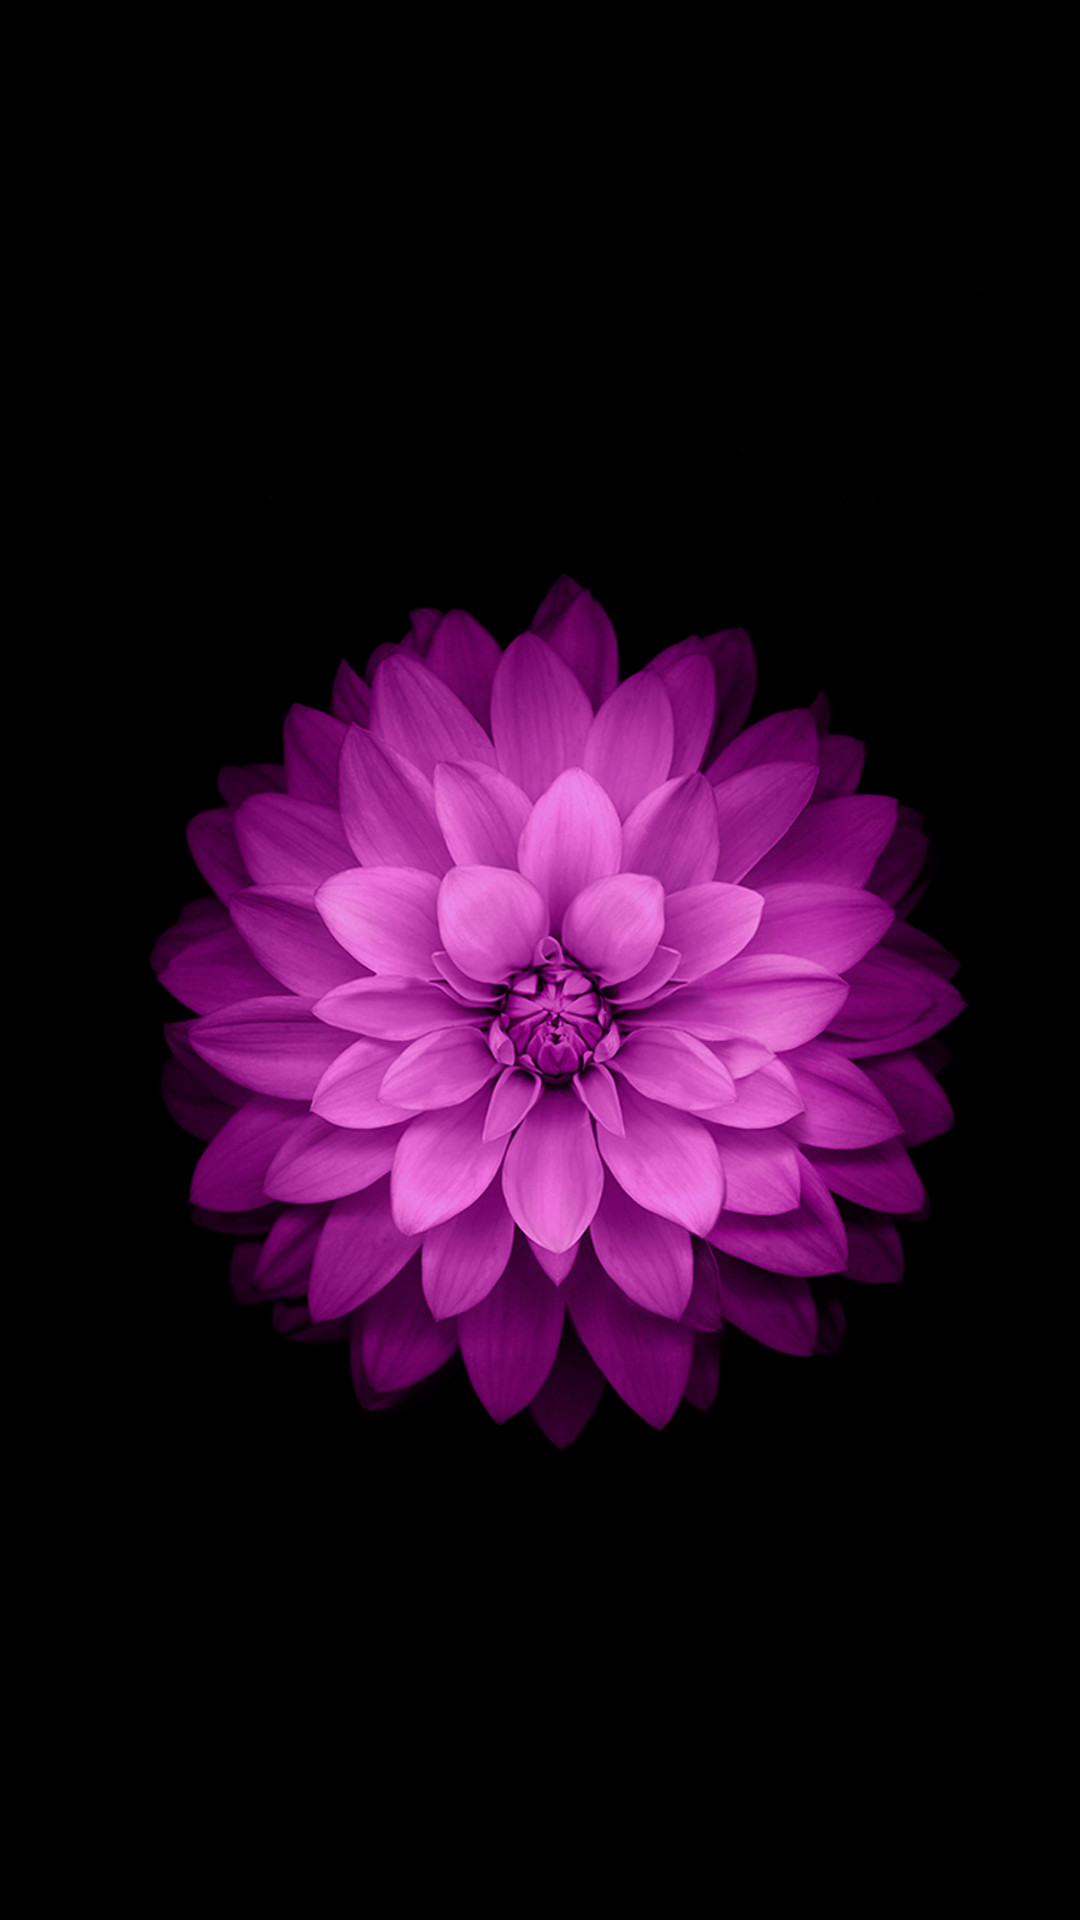 1080x1920 iPhone 6 Plus Wallpaper Official – Purple Lotus Flower